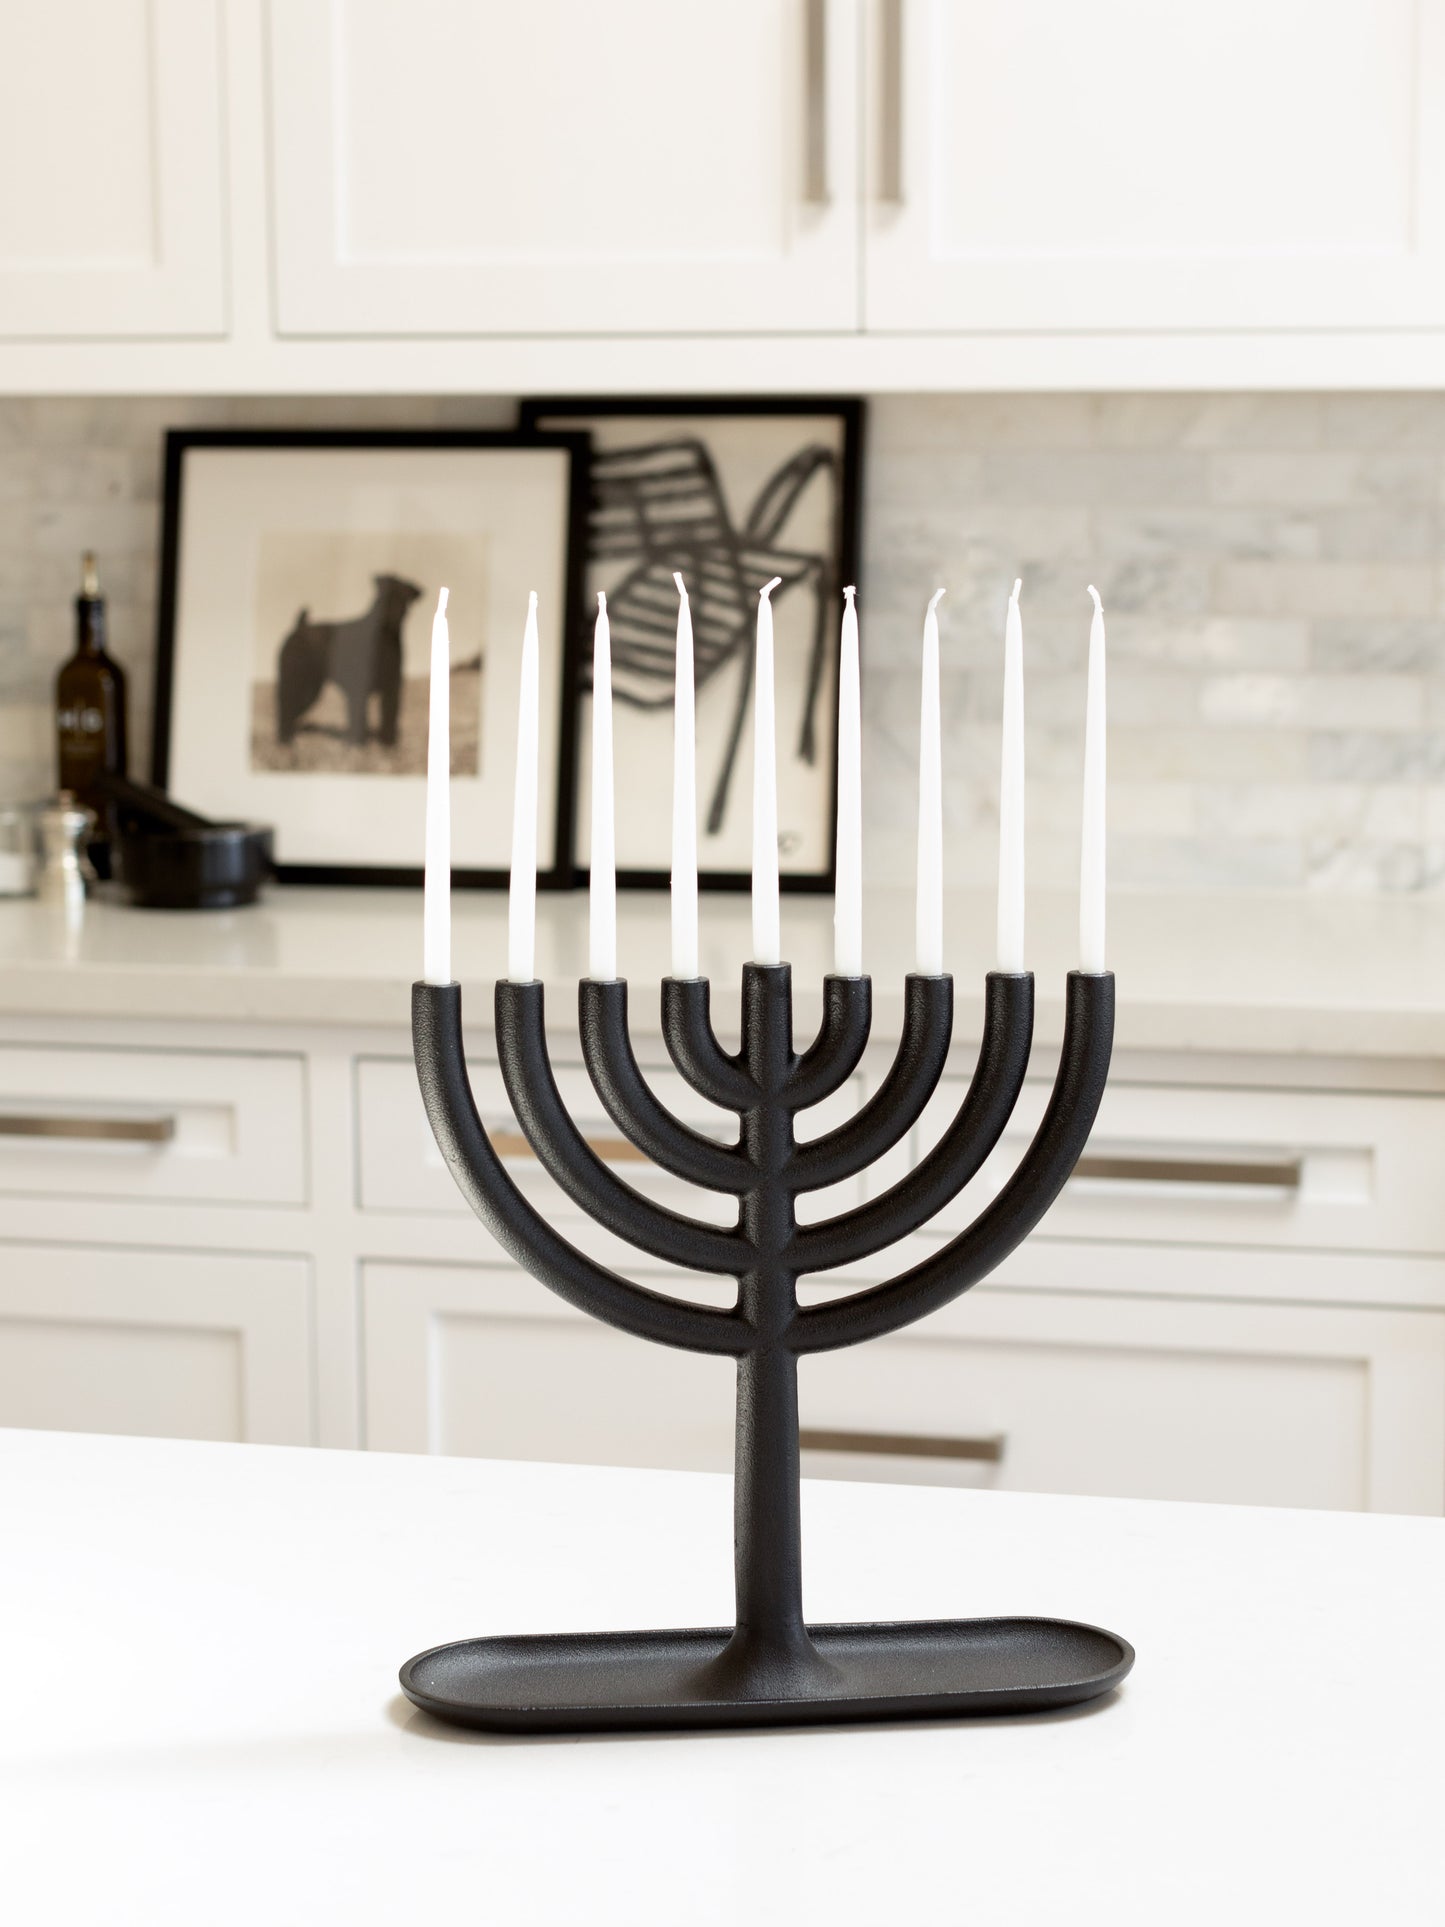 Black Cast Iron Hanukkah Menorah with white candles